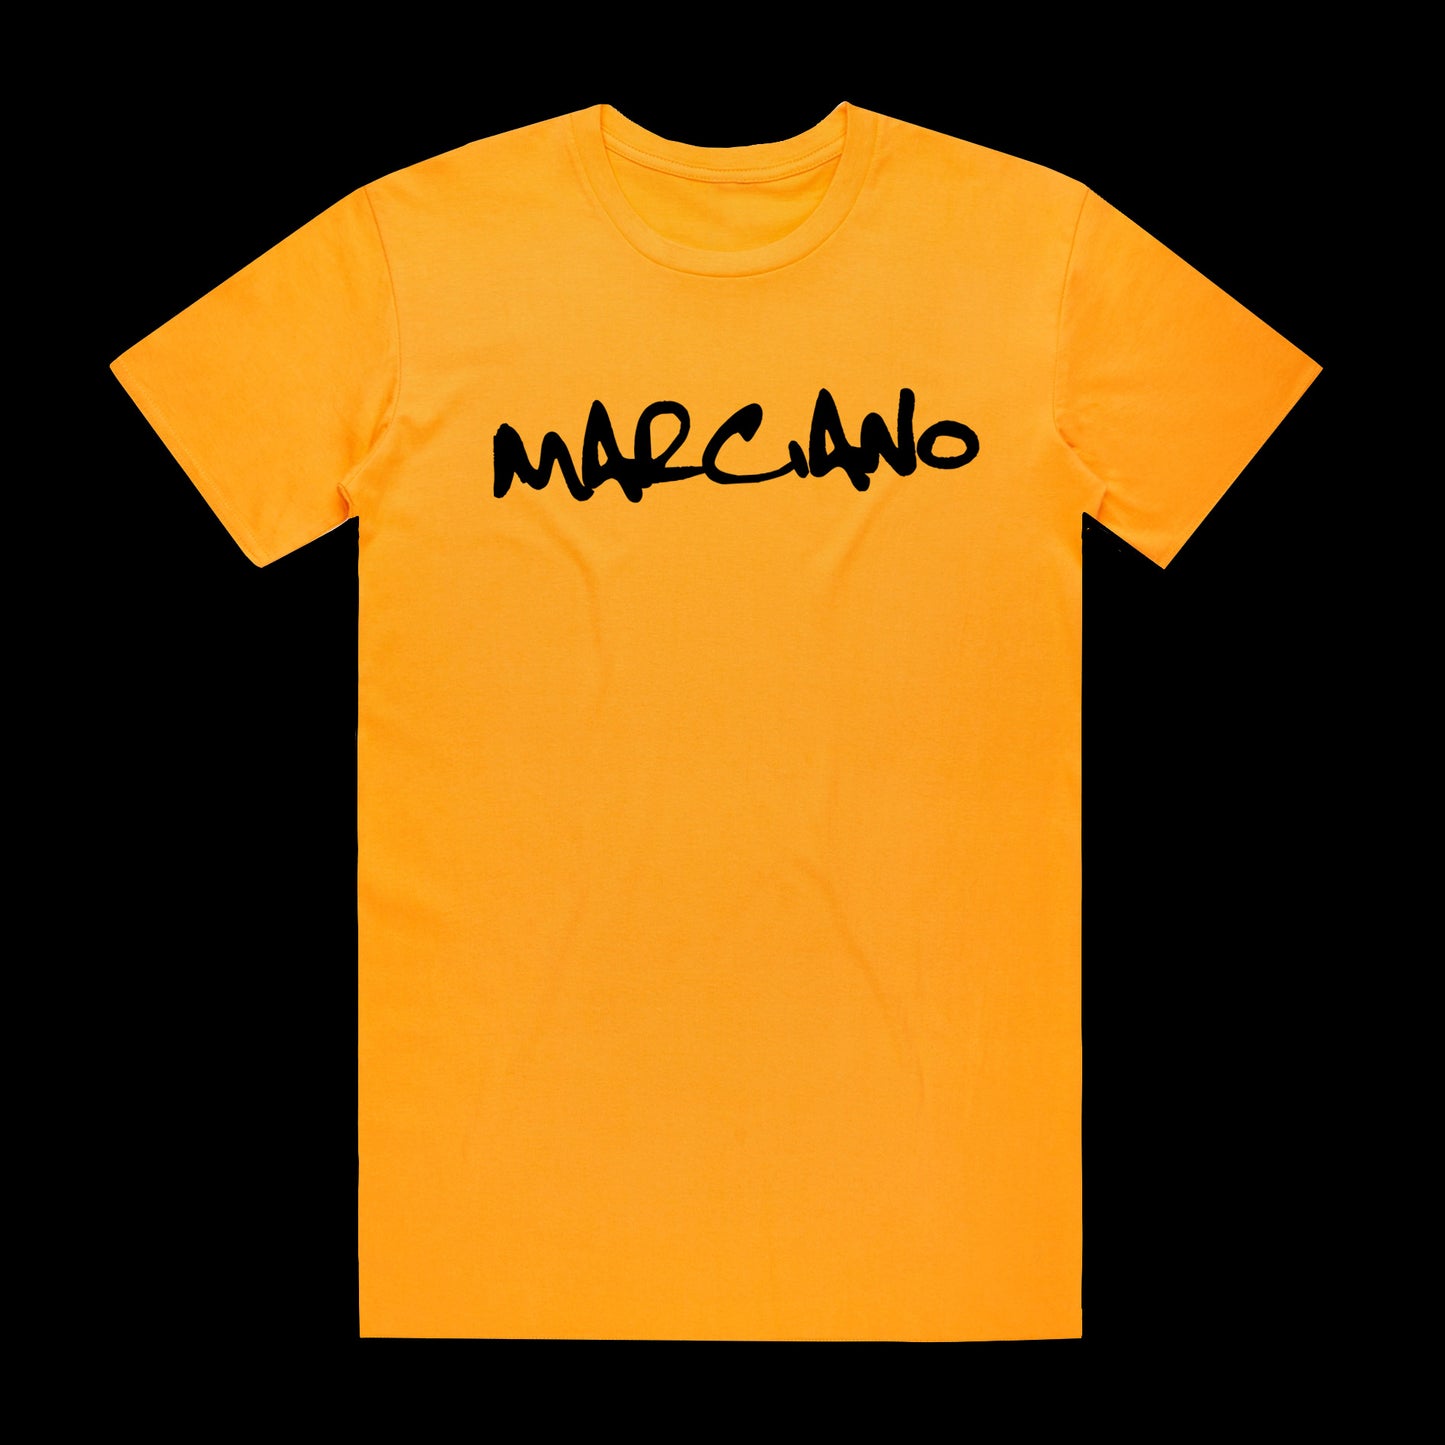 Marciano (Yellow T-Shirt)